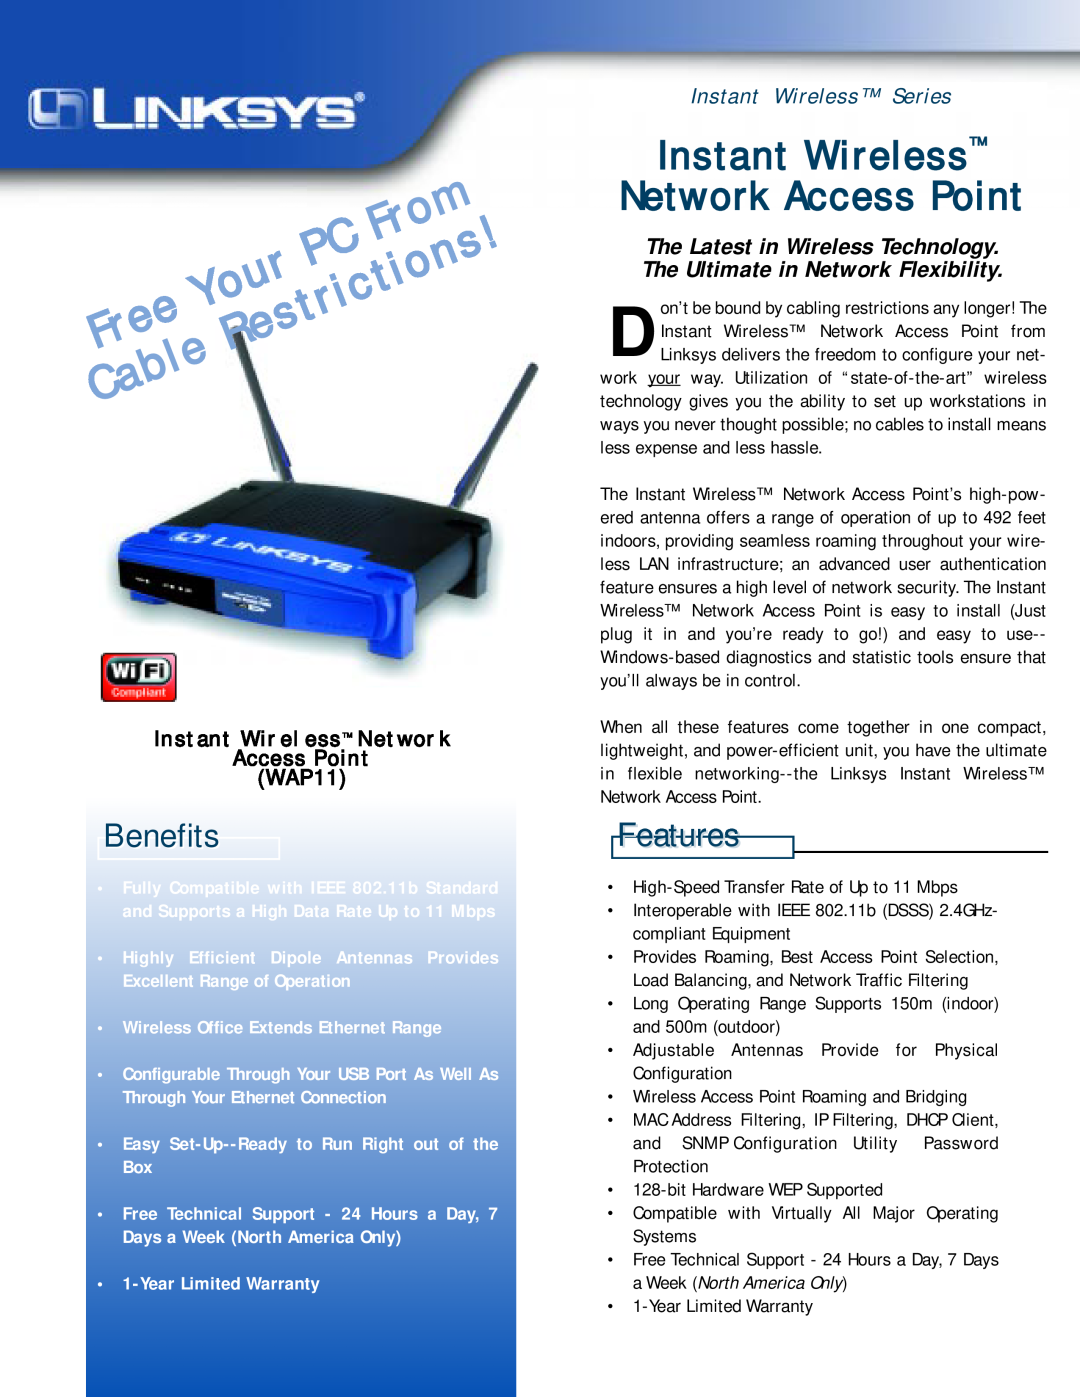 Linksys WAP11 warranty Instant Wireless Network Access Point, Benefits, Features 